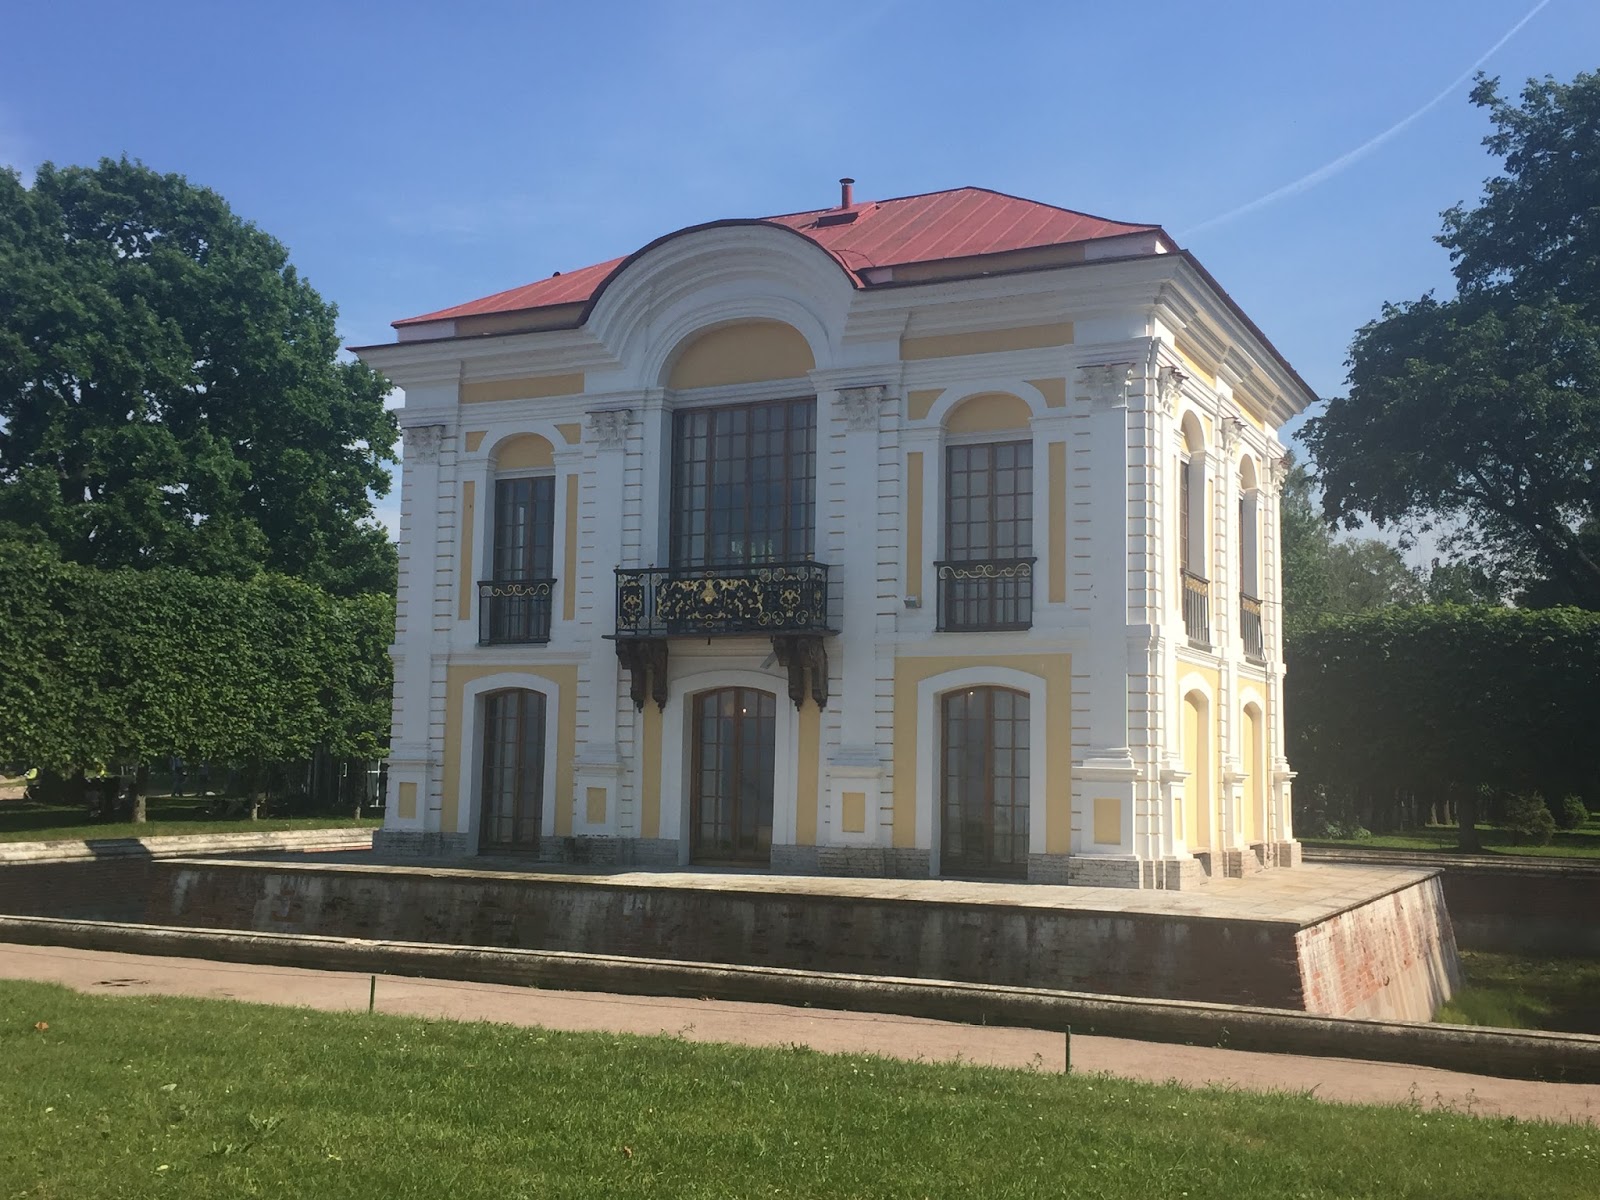 Hermitage Pavilion at Peterhof Palace